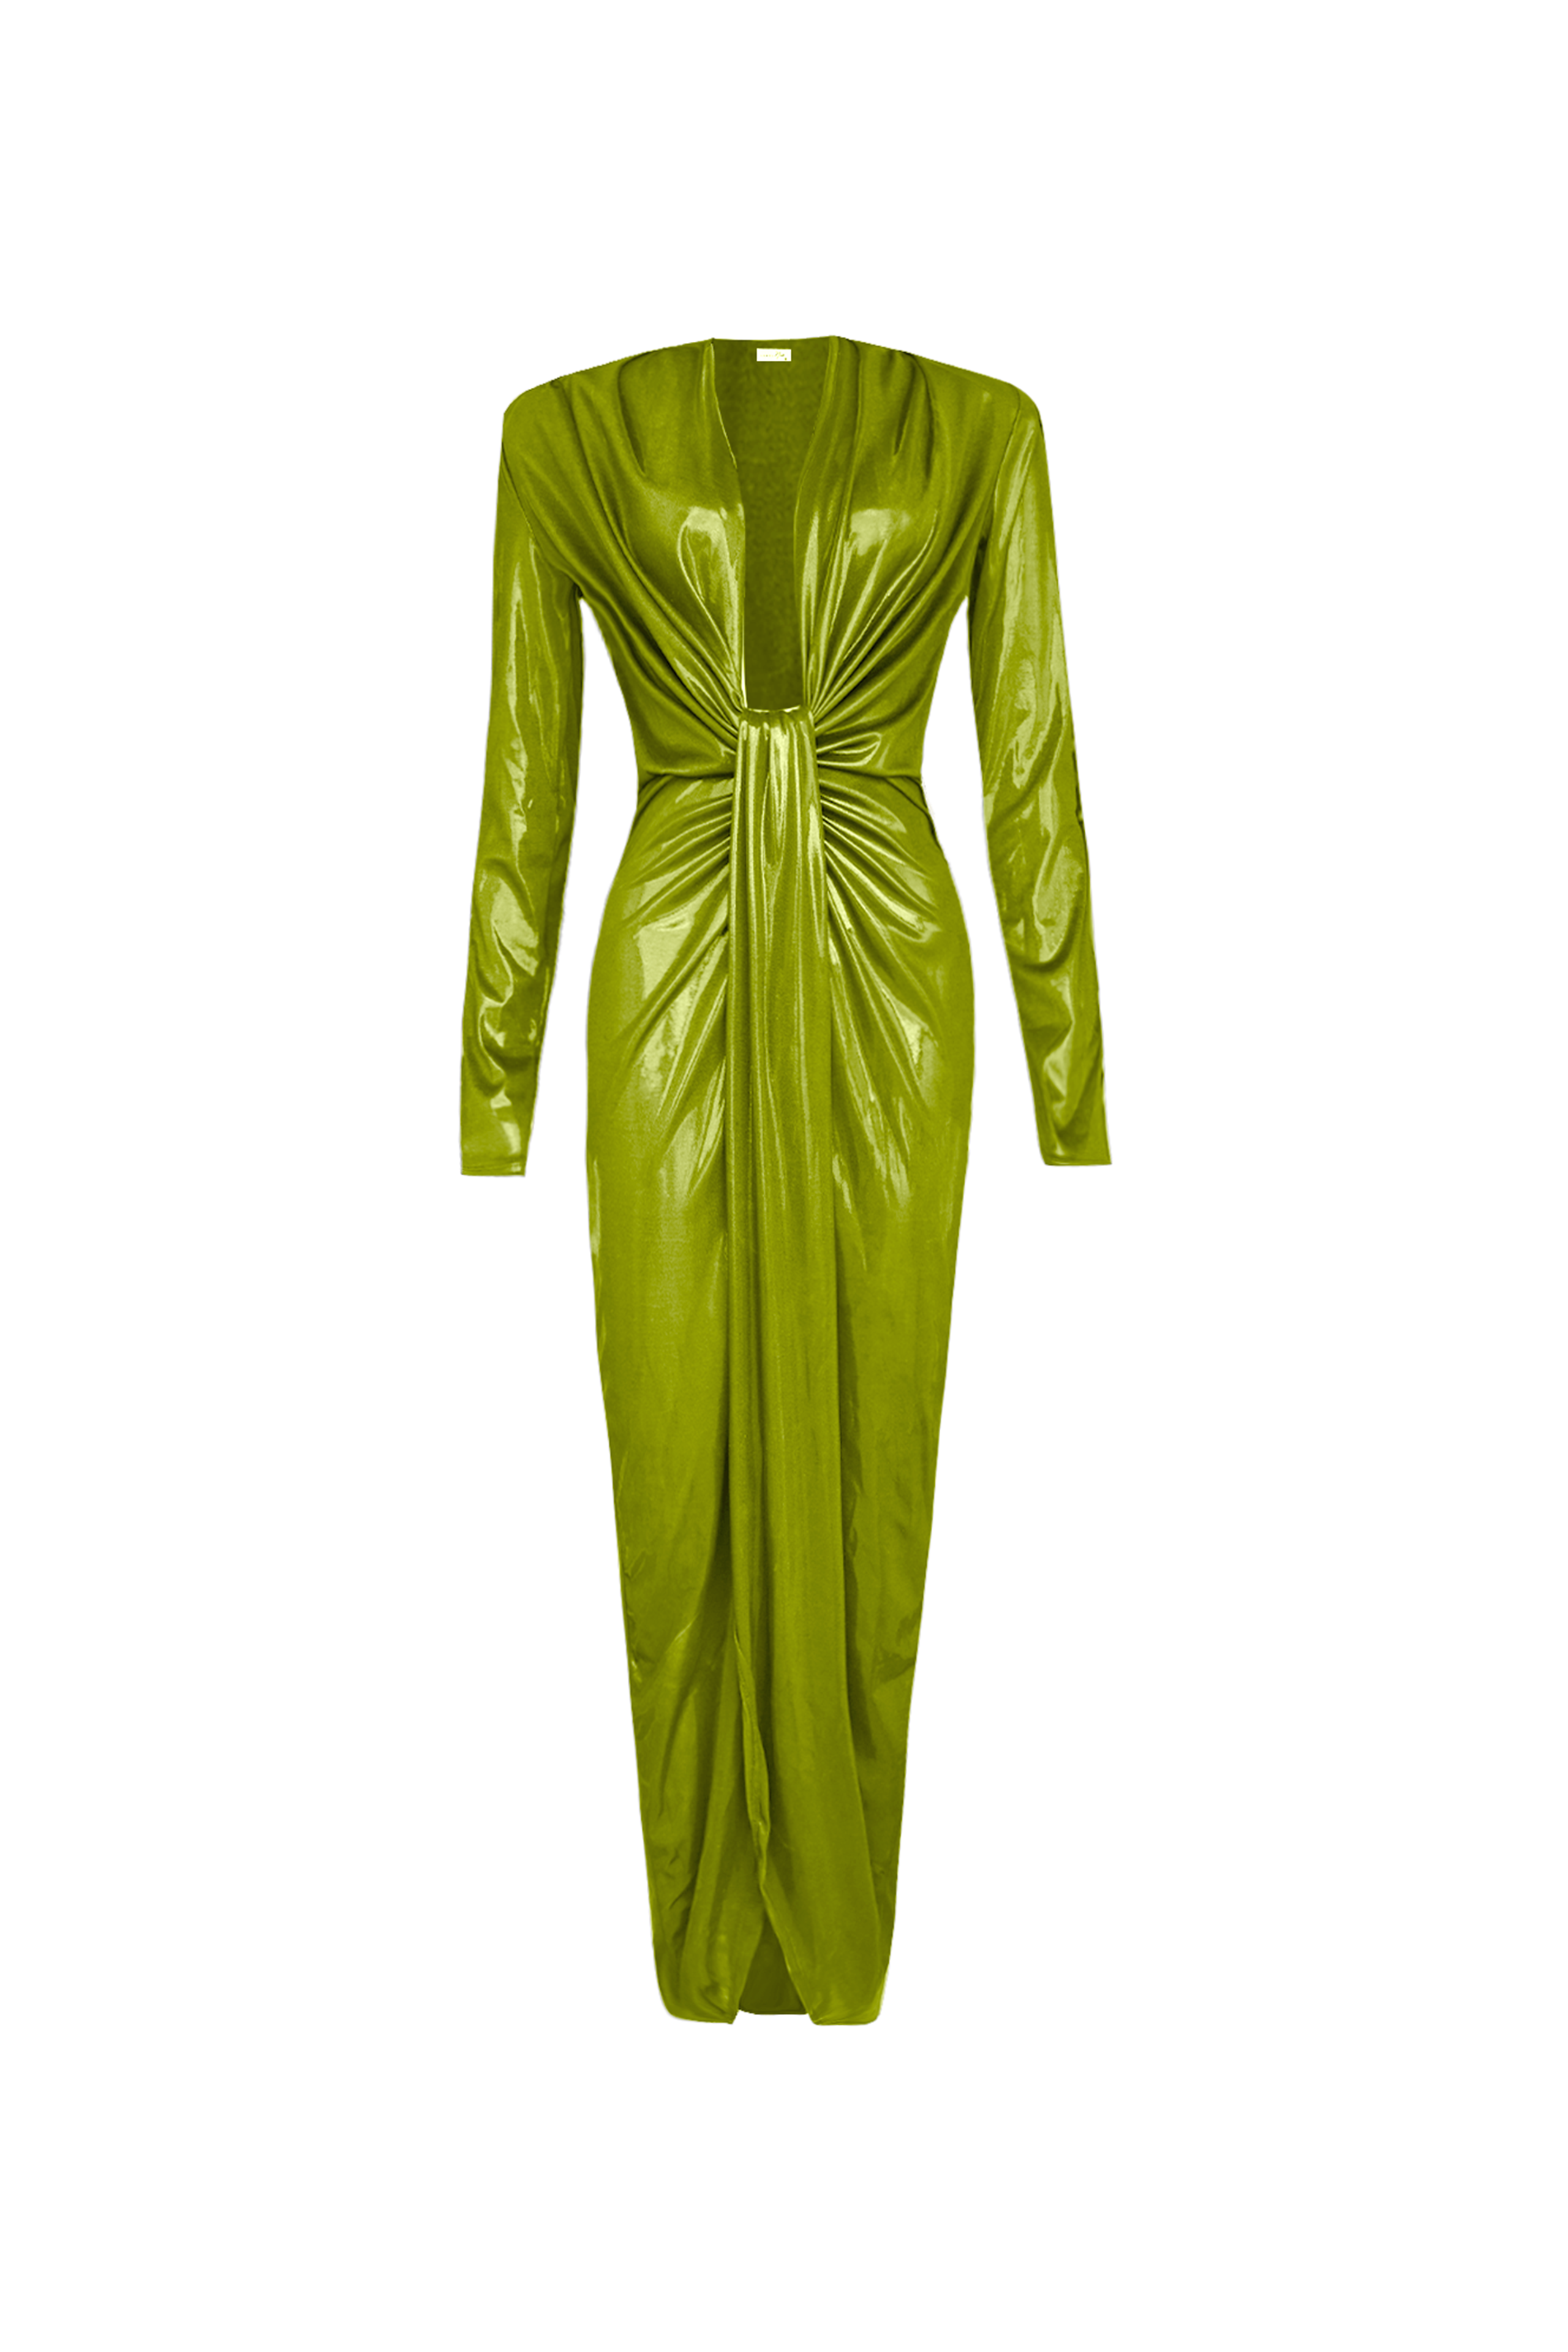 Heila Metallic Kiwi Dress